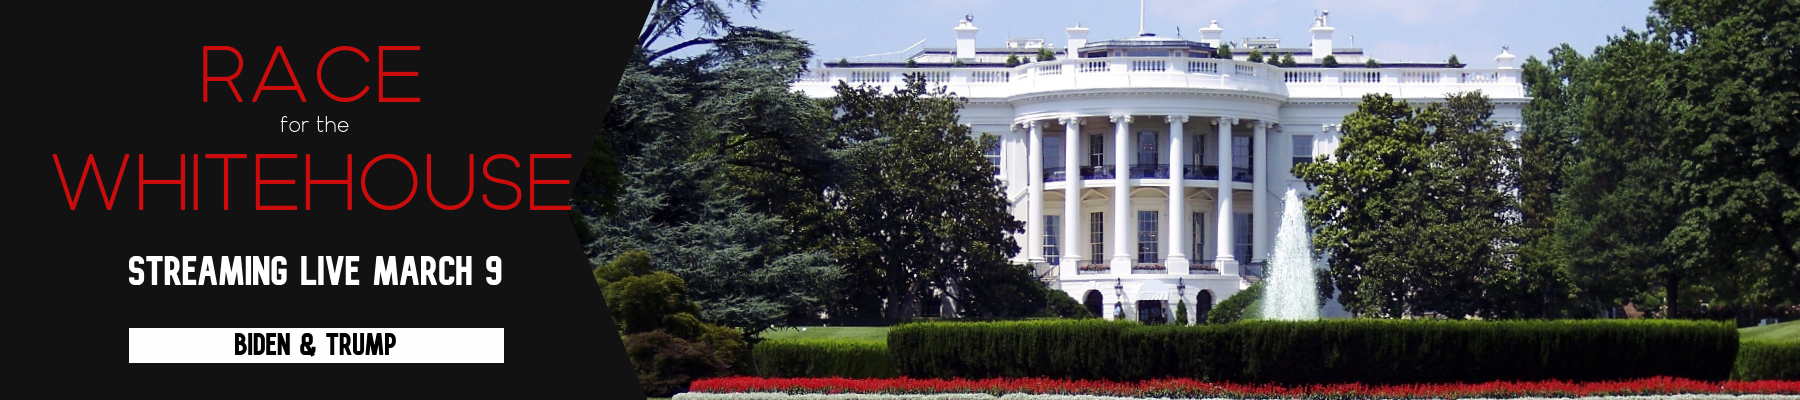 photo of the whitehouse